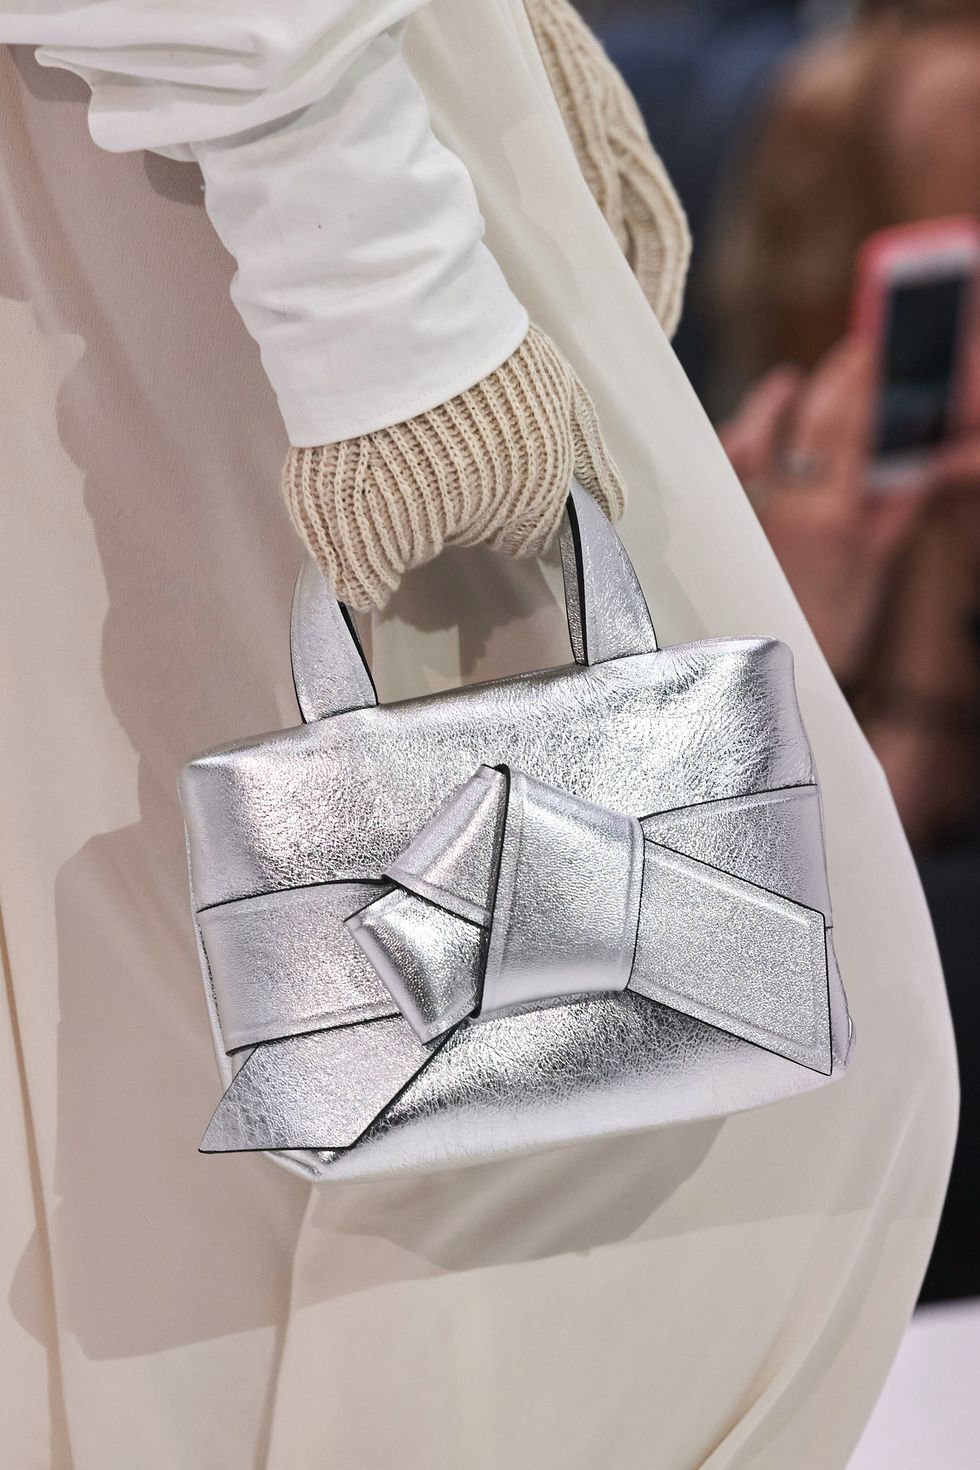 The hottest designer handbags for autumn 2021 – from Jennifer